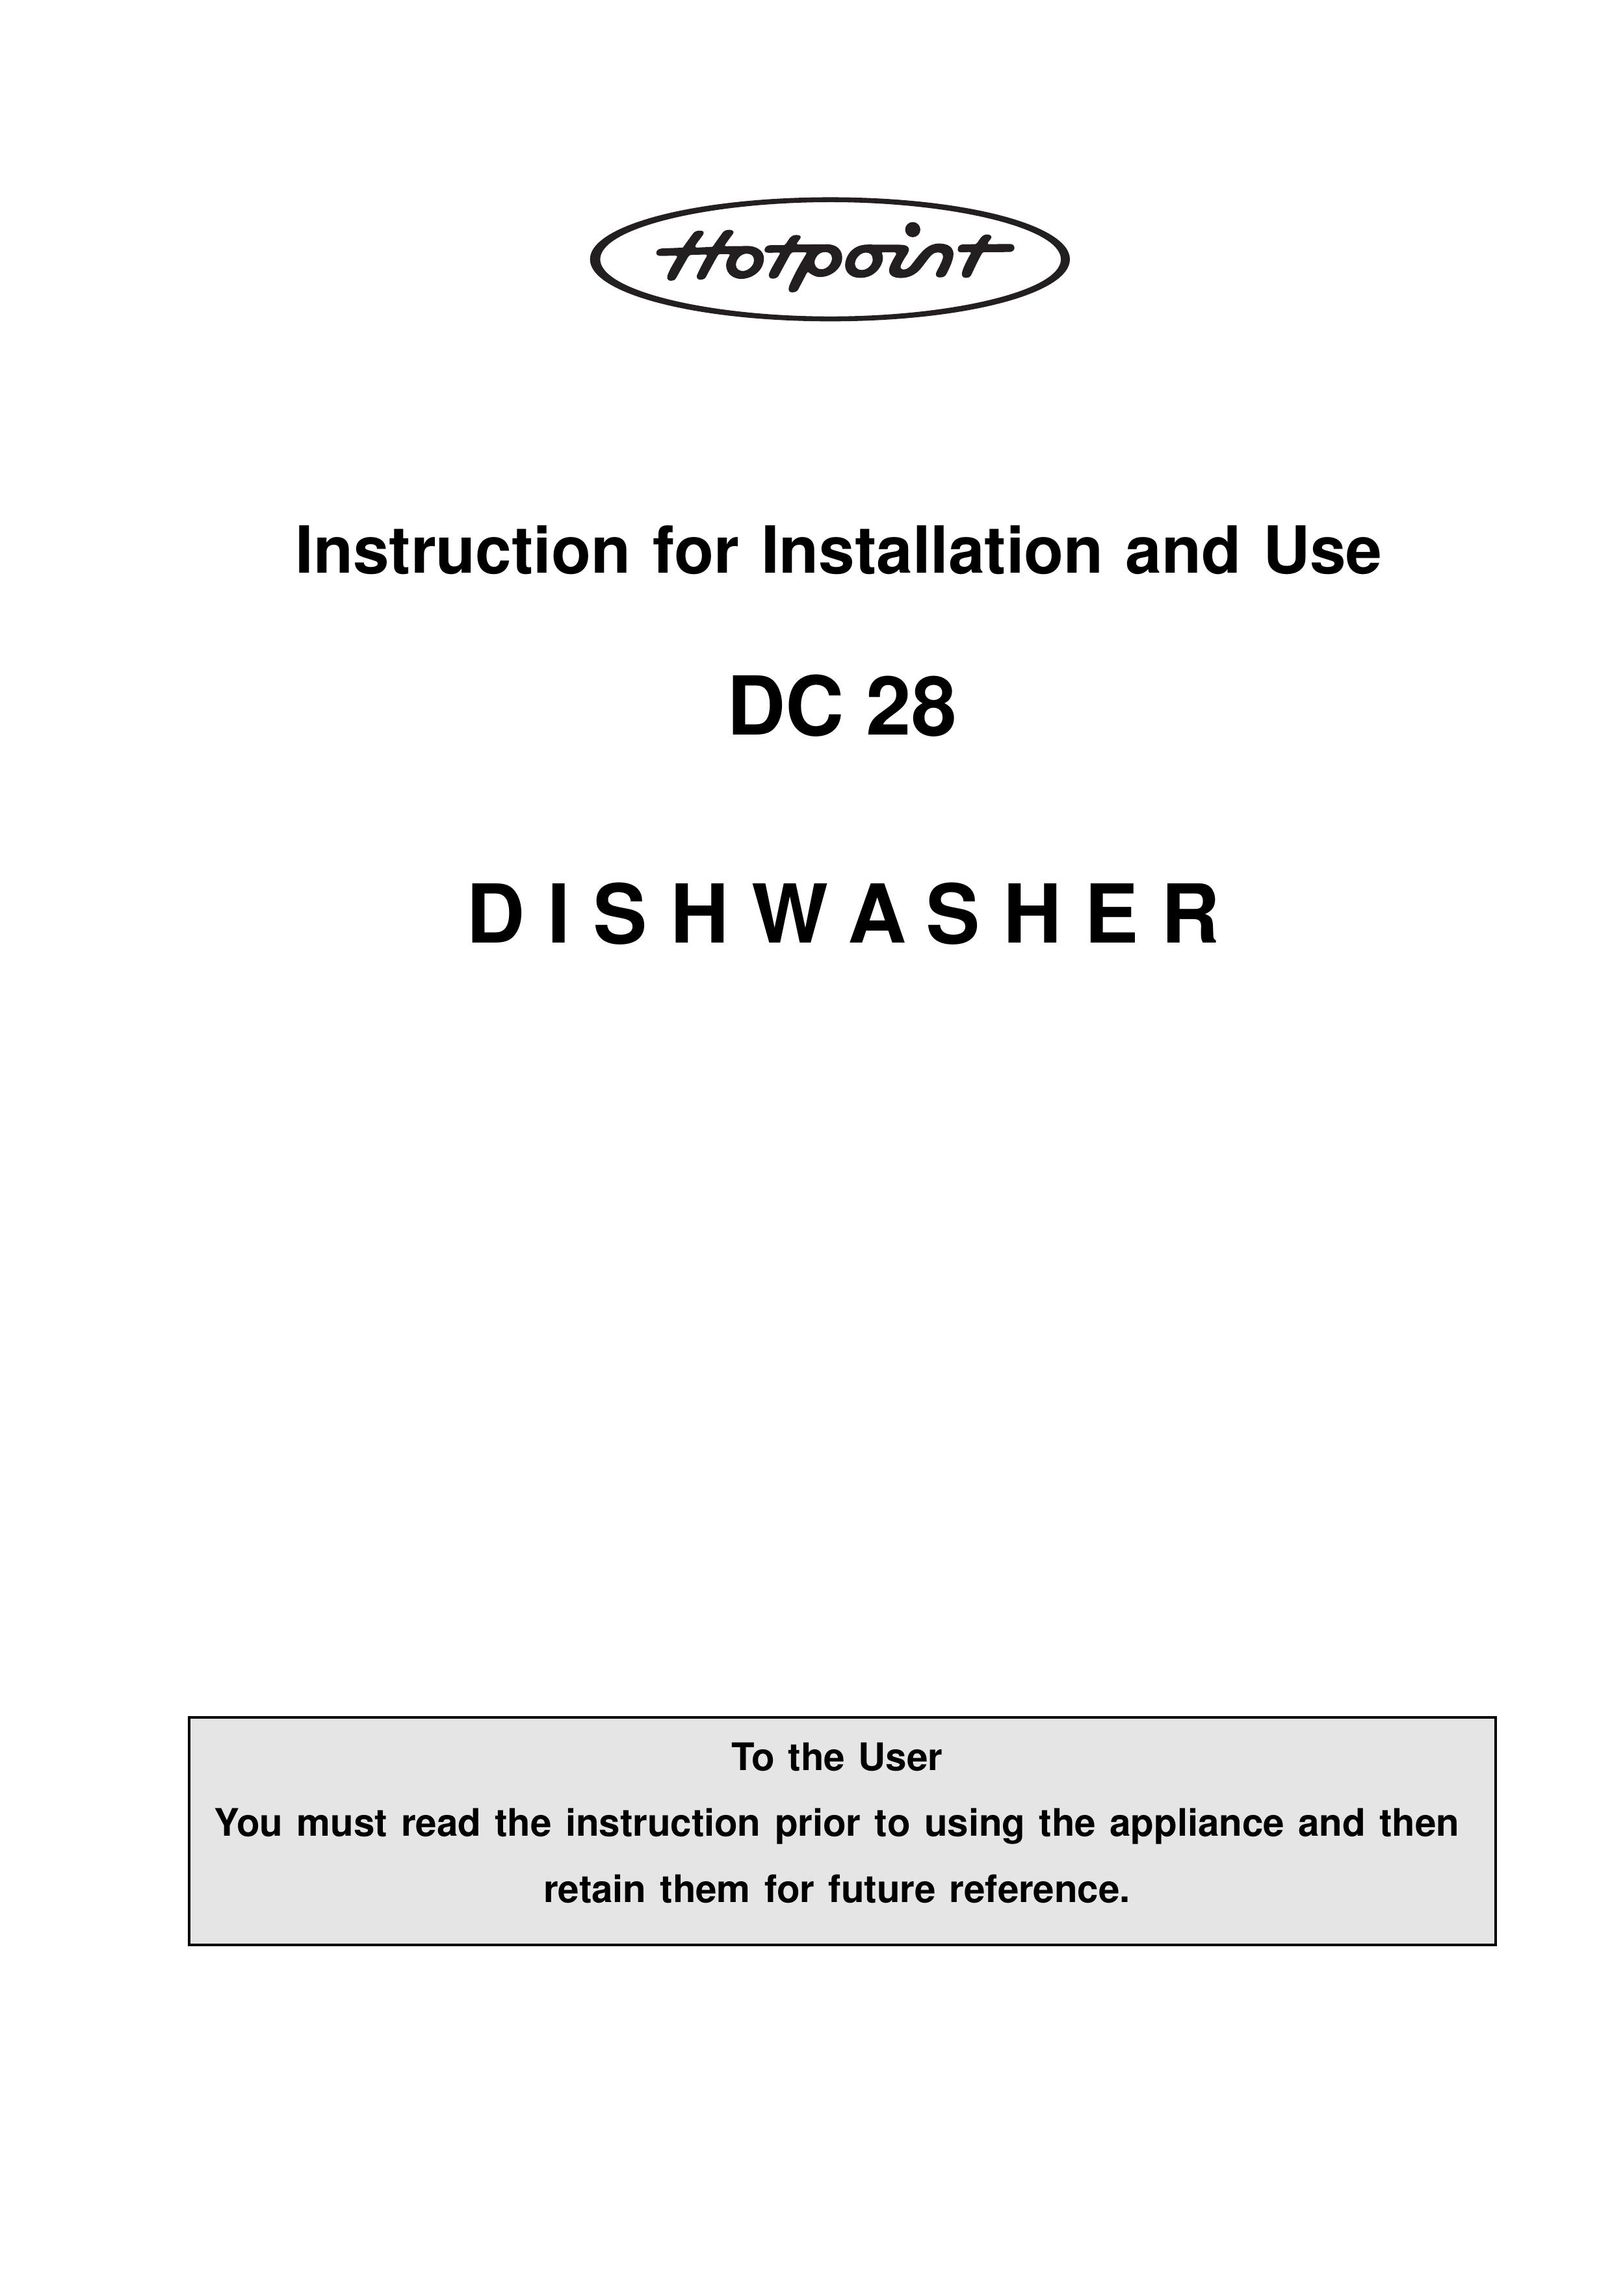 Hotpoint DC 28 Dishwasher User Manual